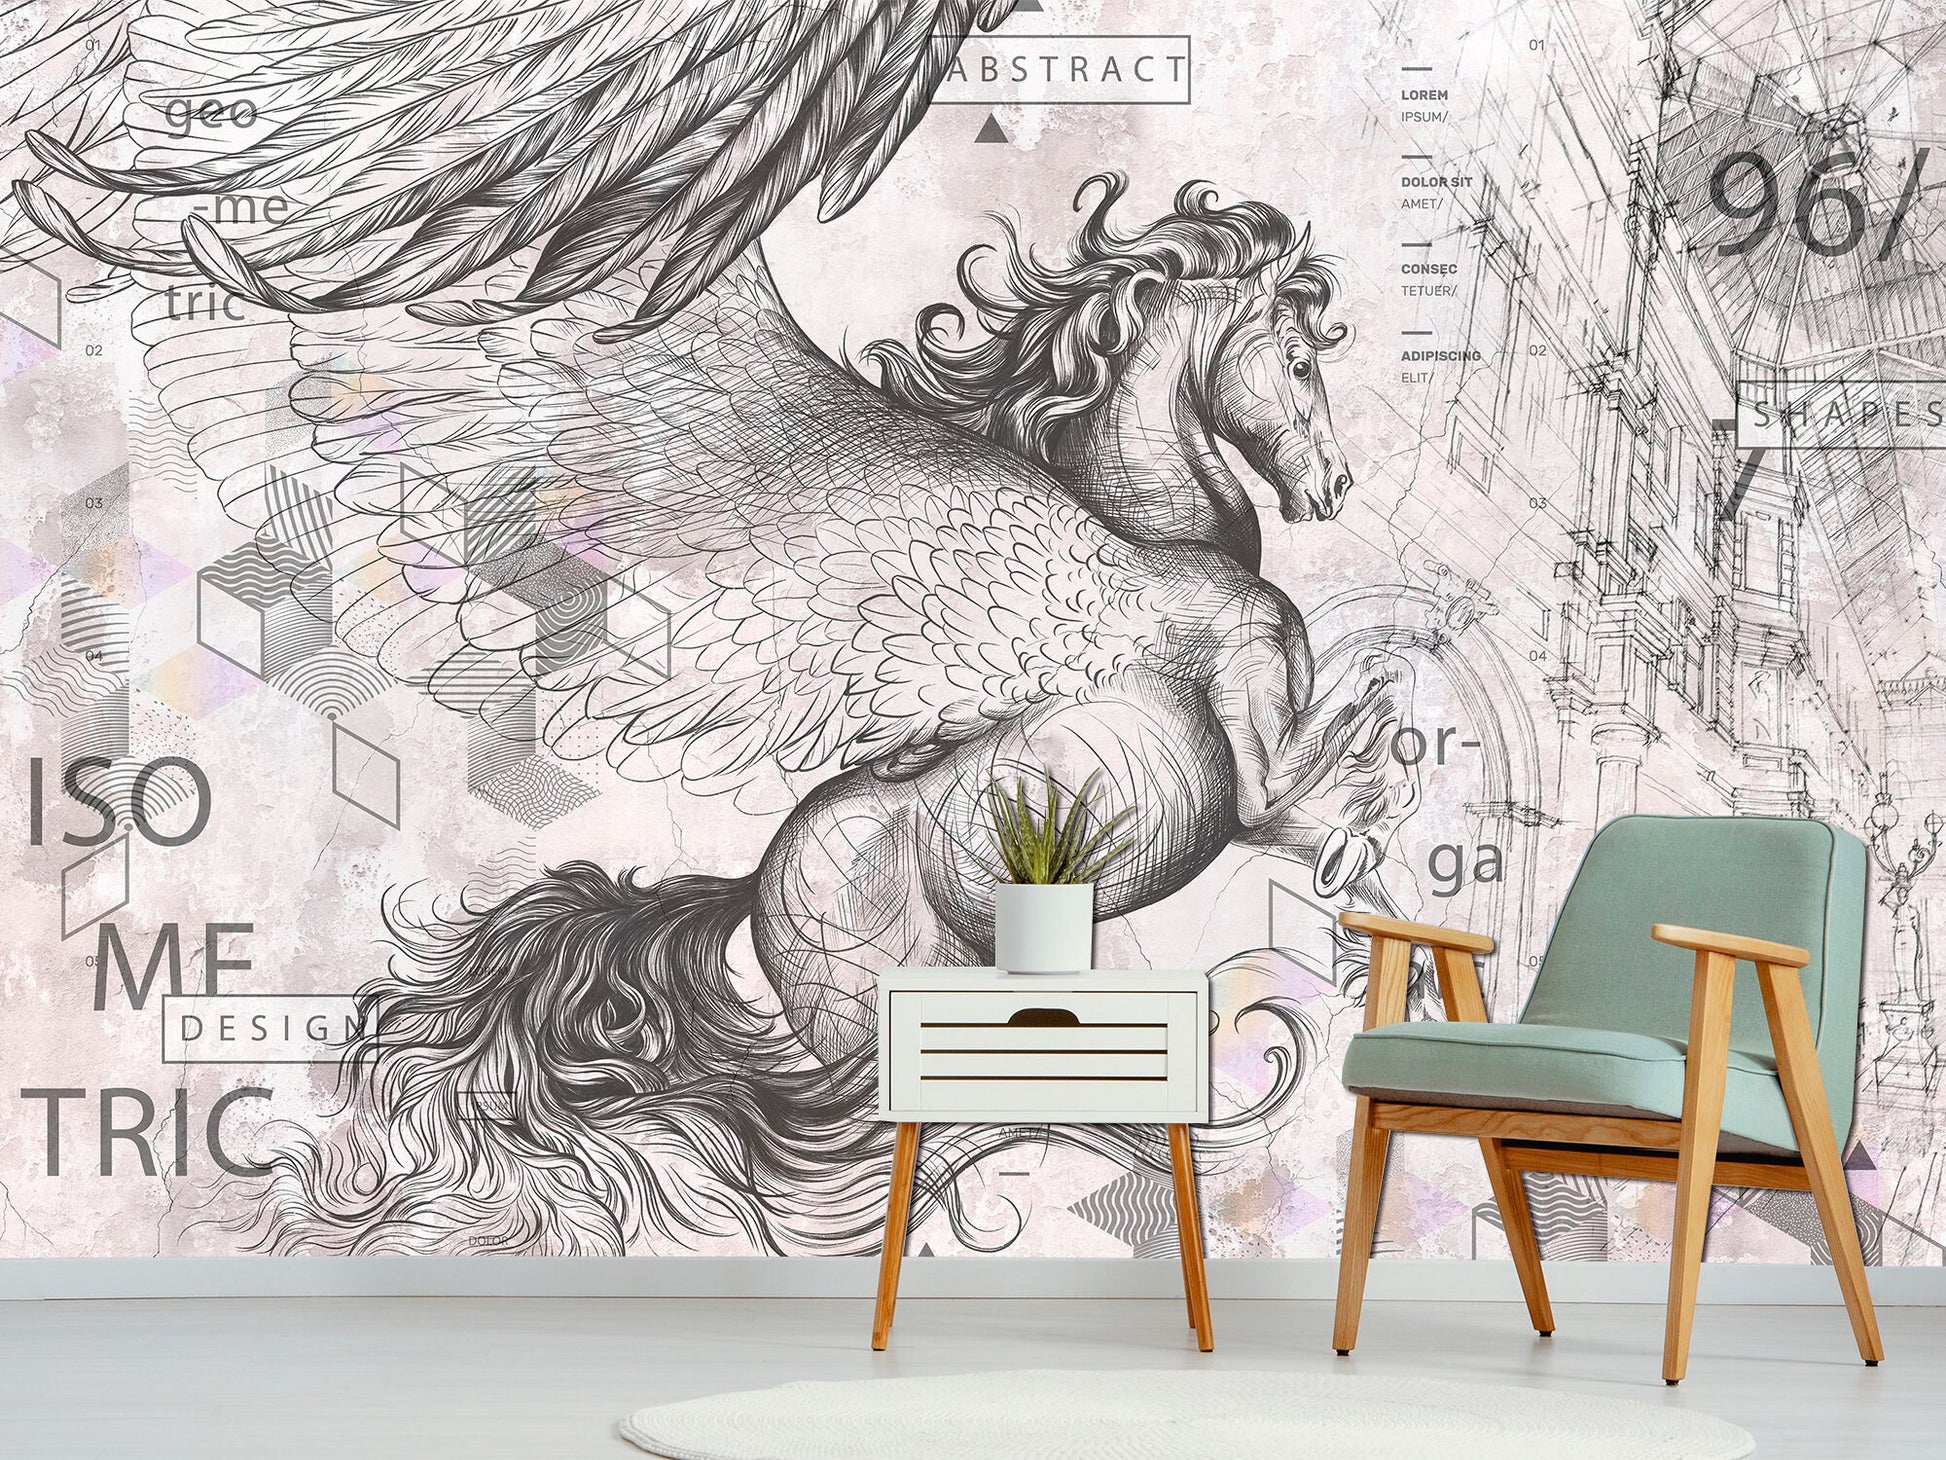 Pegasus wall decor Wallpaper mural Horse wallpaper, Fantasy wall art Art deco wallpaper Adhesive wallpaper